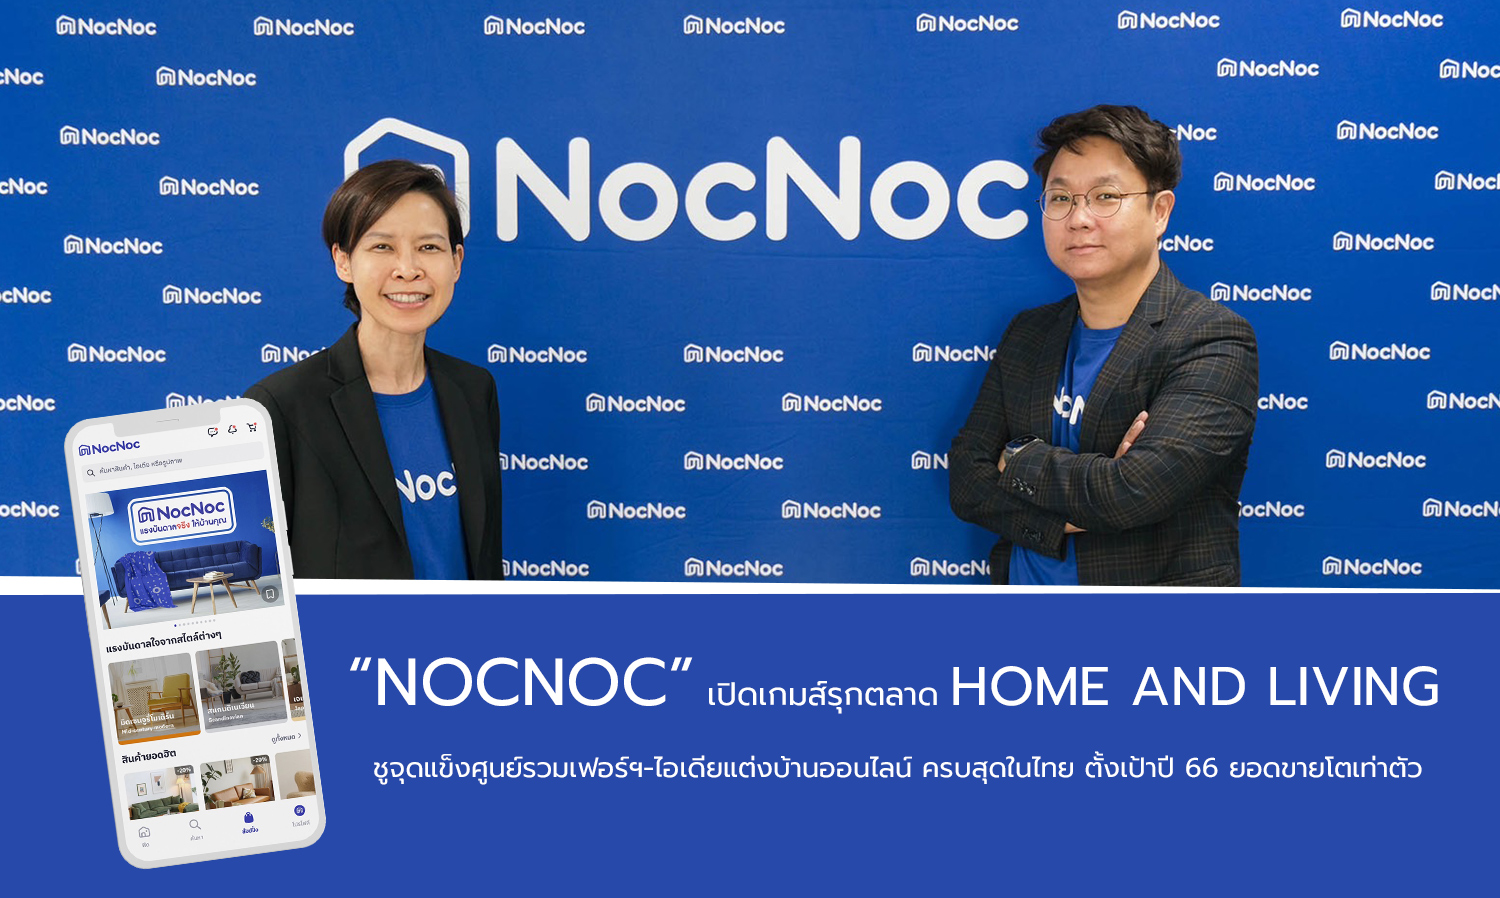 “NocNoc” เปิดเกมส์รุกตลาด Home and Living ชูจุดแข็งศูนย์รวมเฟอร์ฯออนไลน์ ตั้งเป้าปี 66 ยอดขายโตเท่าตัว 